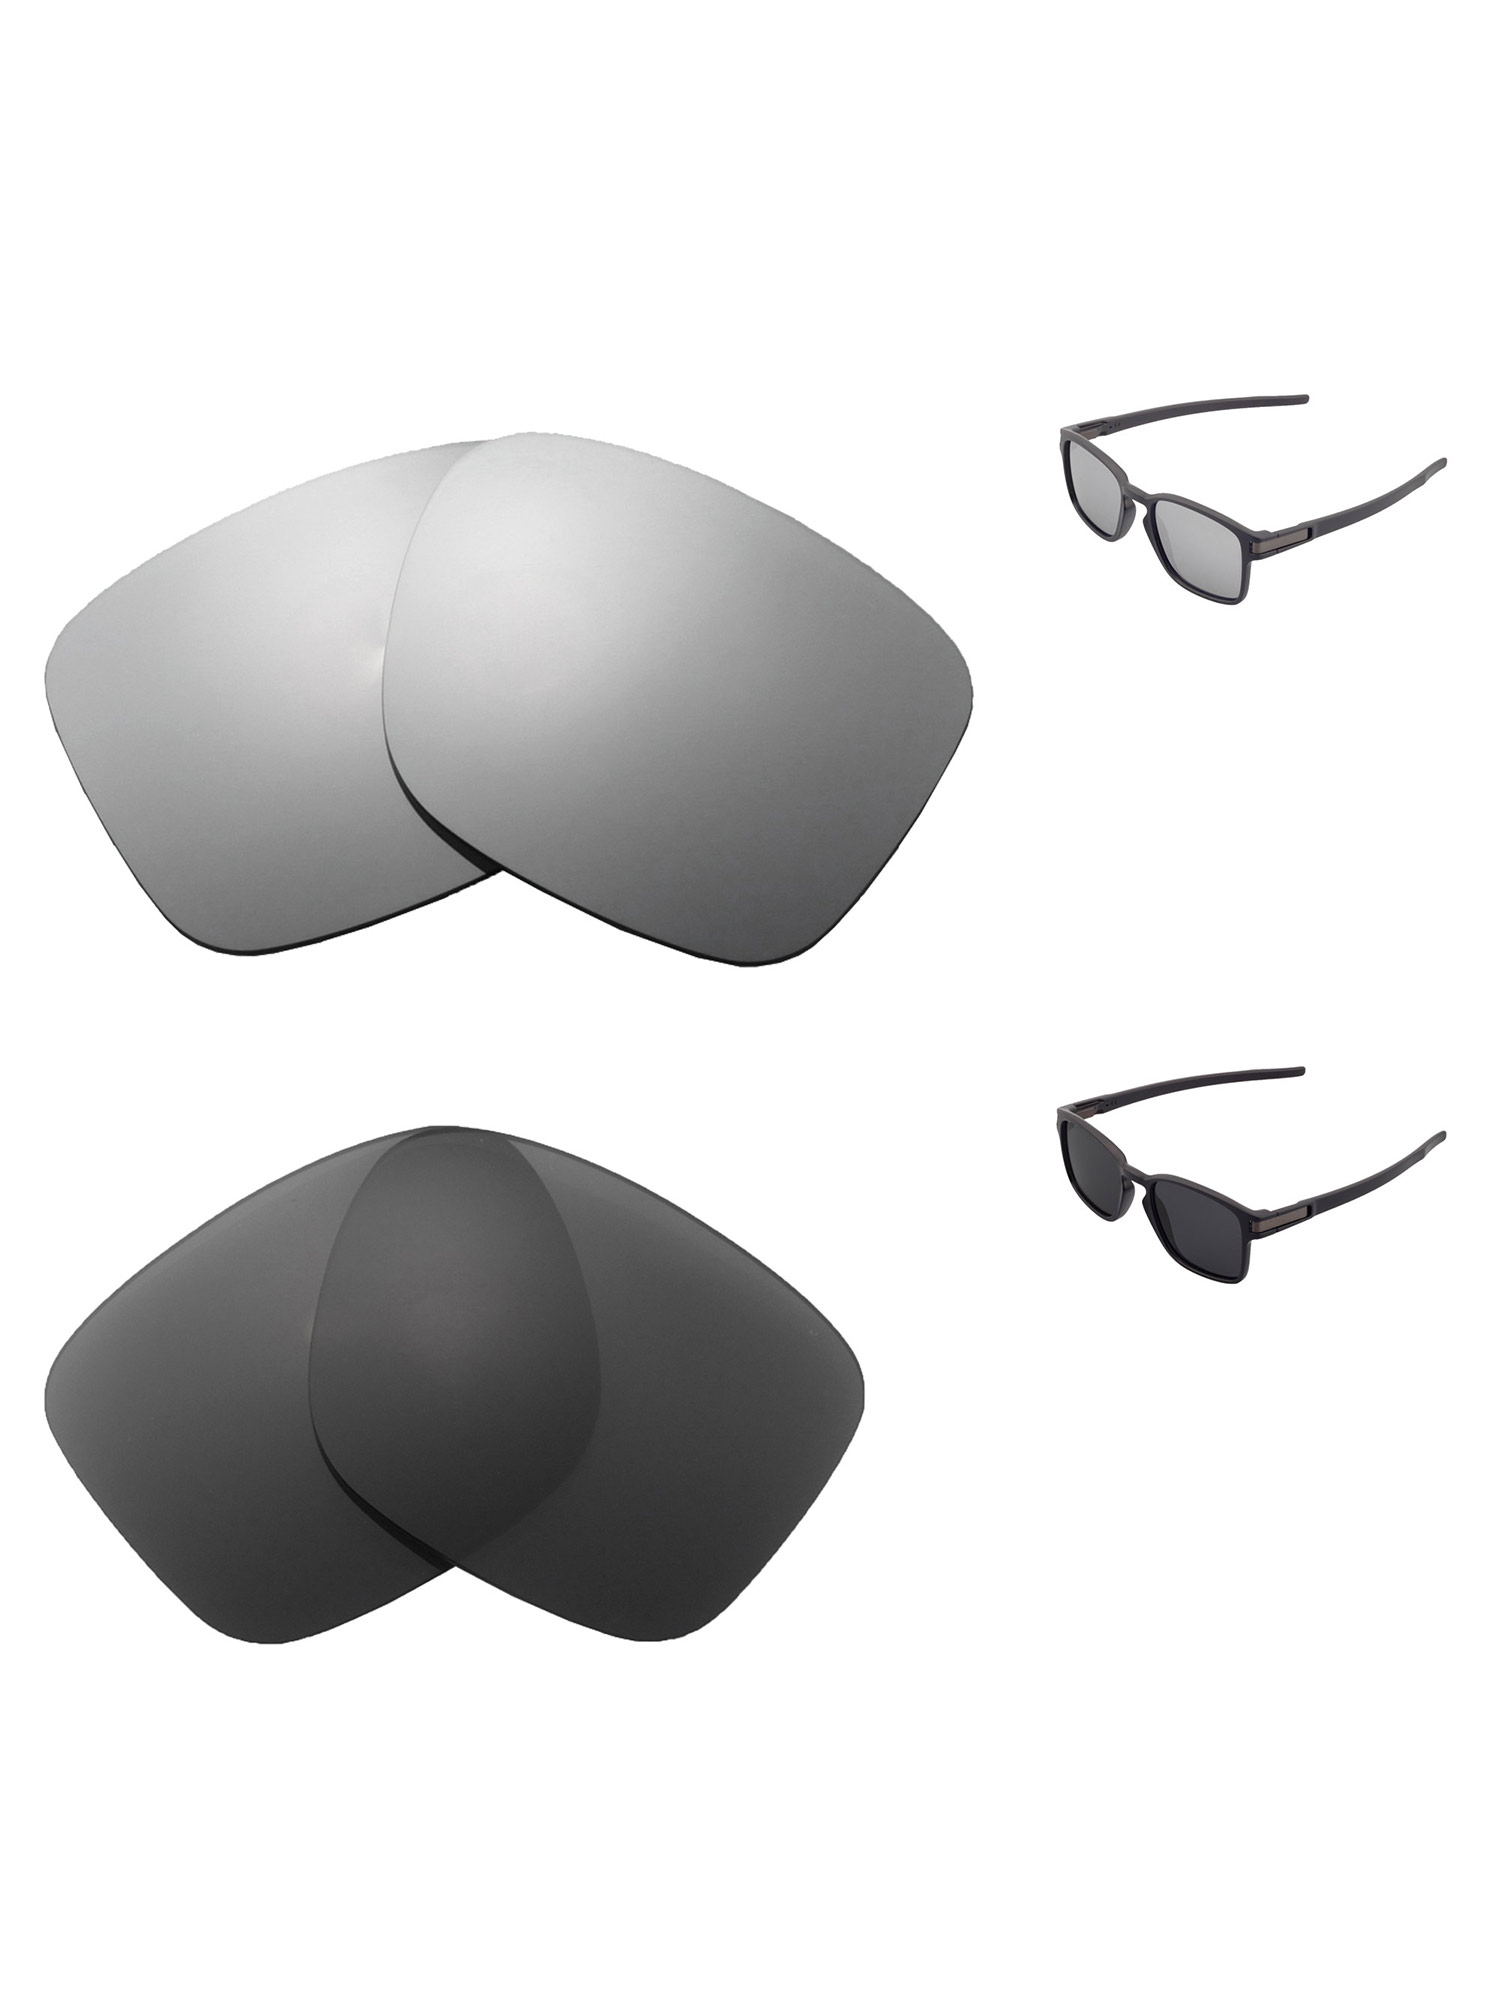 Walleva Polarized Titanium + Black Replacement Lenses For Oakley Latch SQ Sunglasses - image 1 of 6